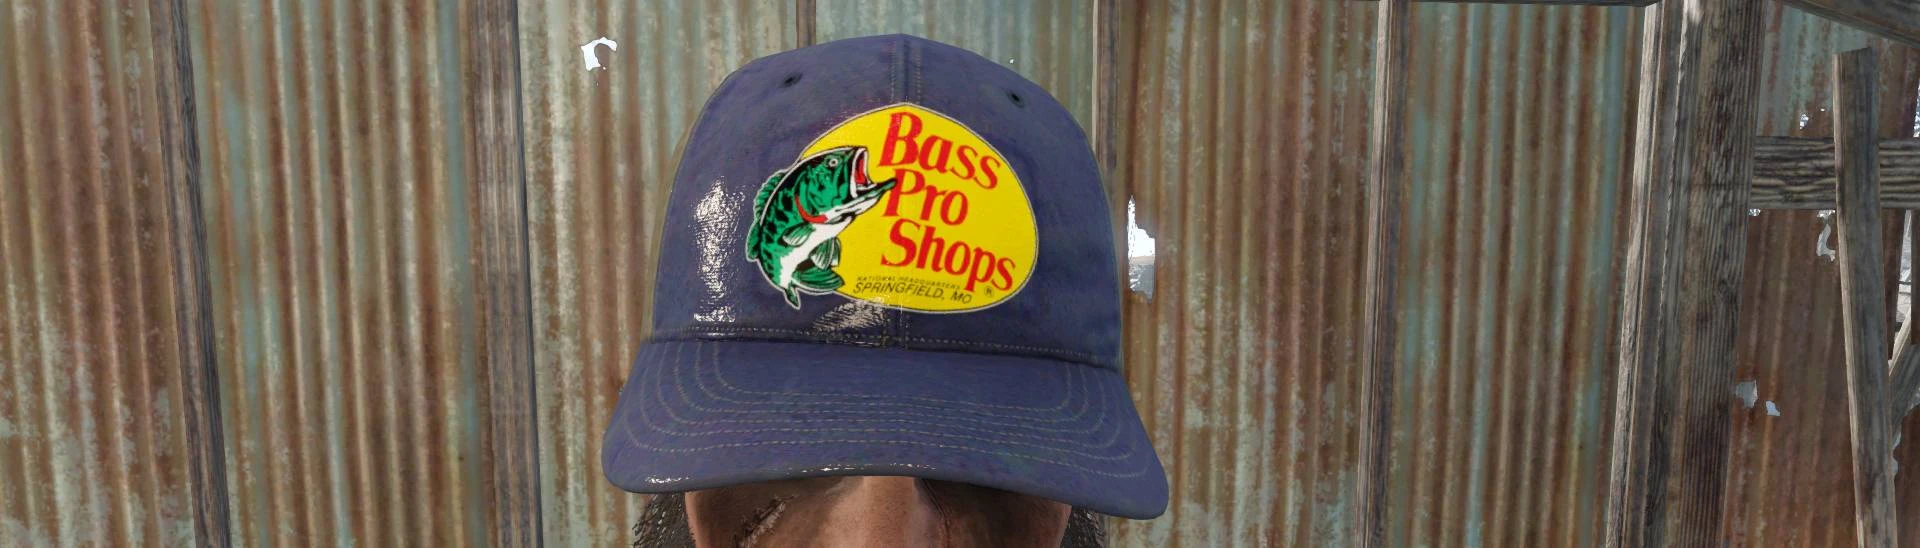 Bass Pro Shop Hat at Fallout 4 Nexus - Mods and community